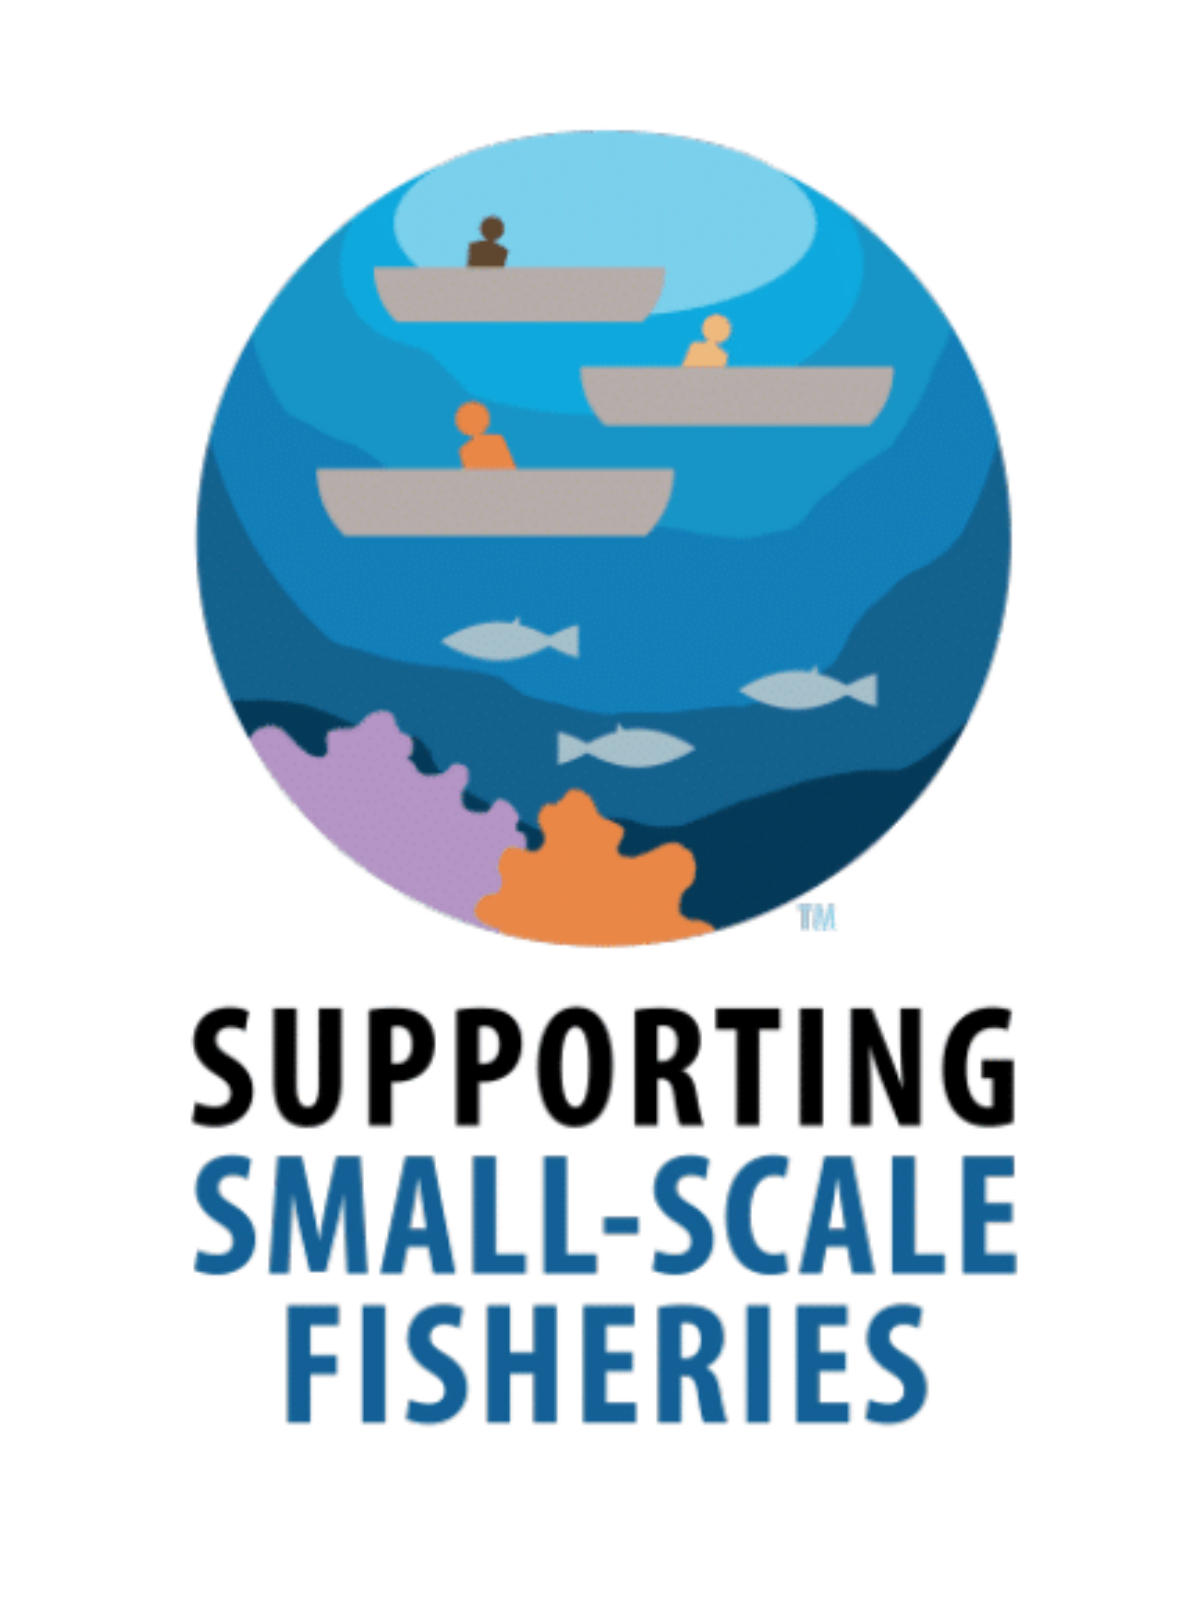 small-scale fisheries logo medium